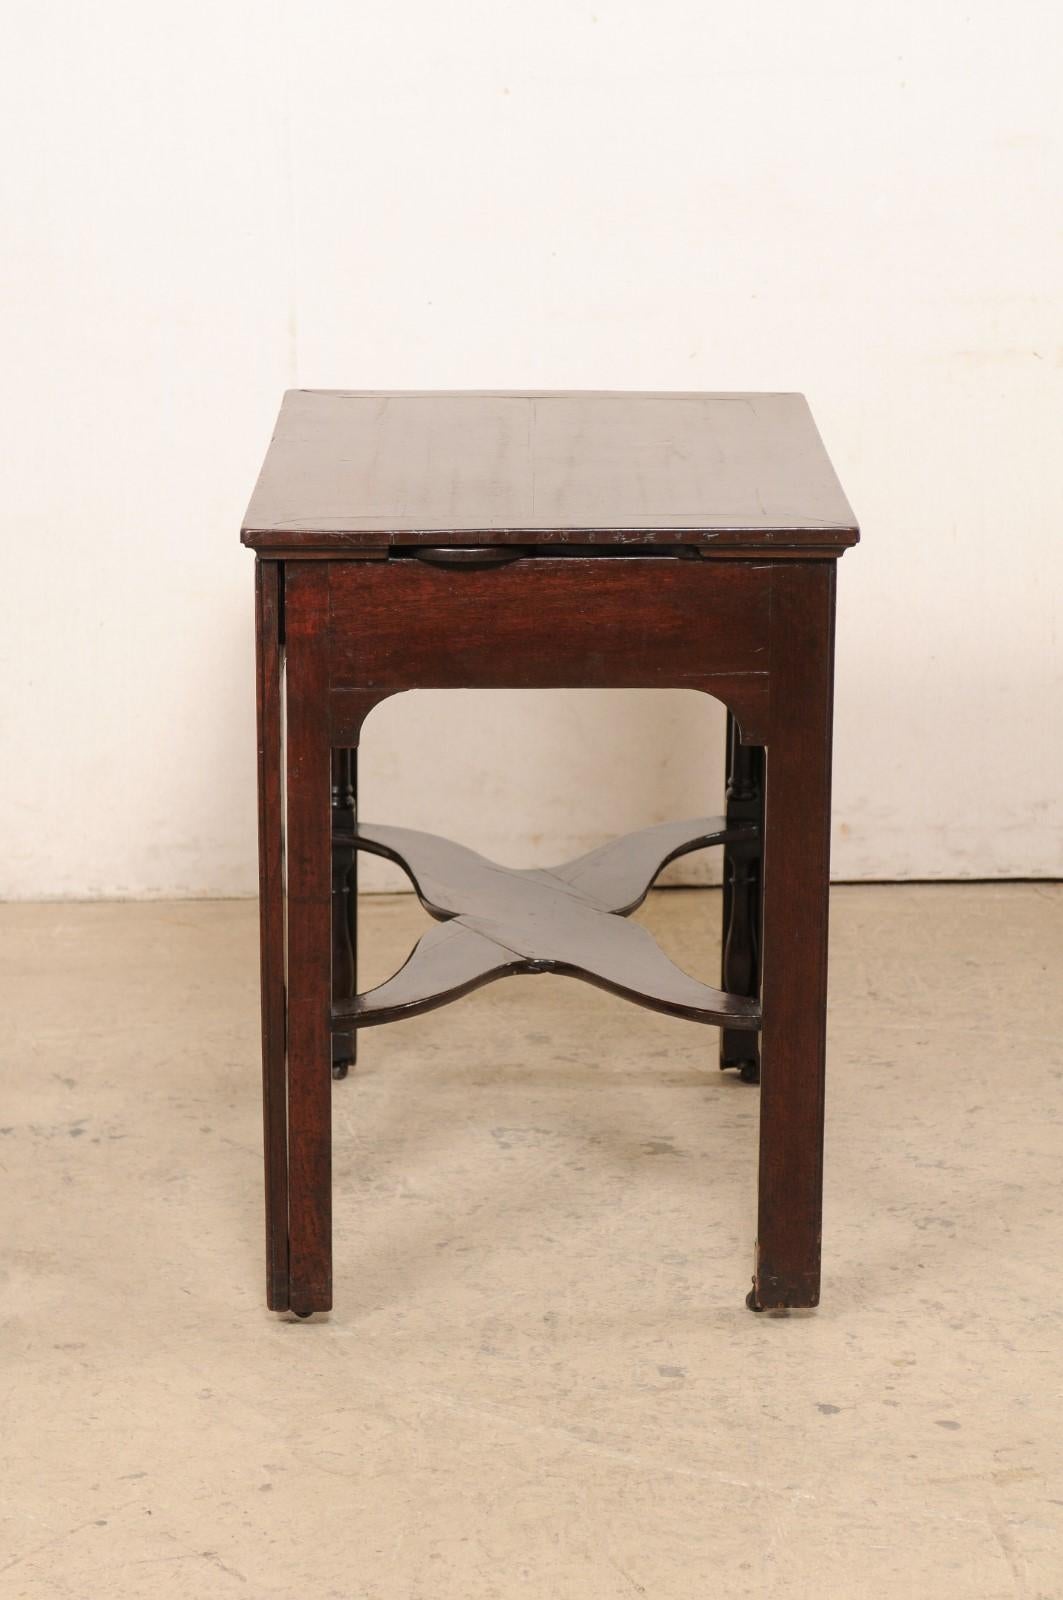 18th C. English Architect's Table w/Unique Legs, Expanding Top, & Candle Shelves For Sale 5